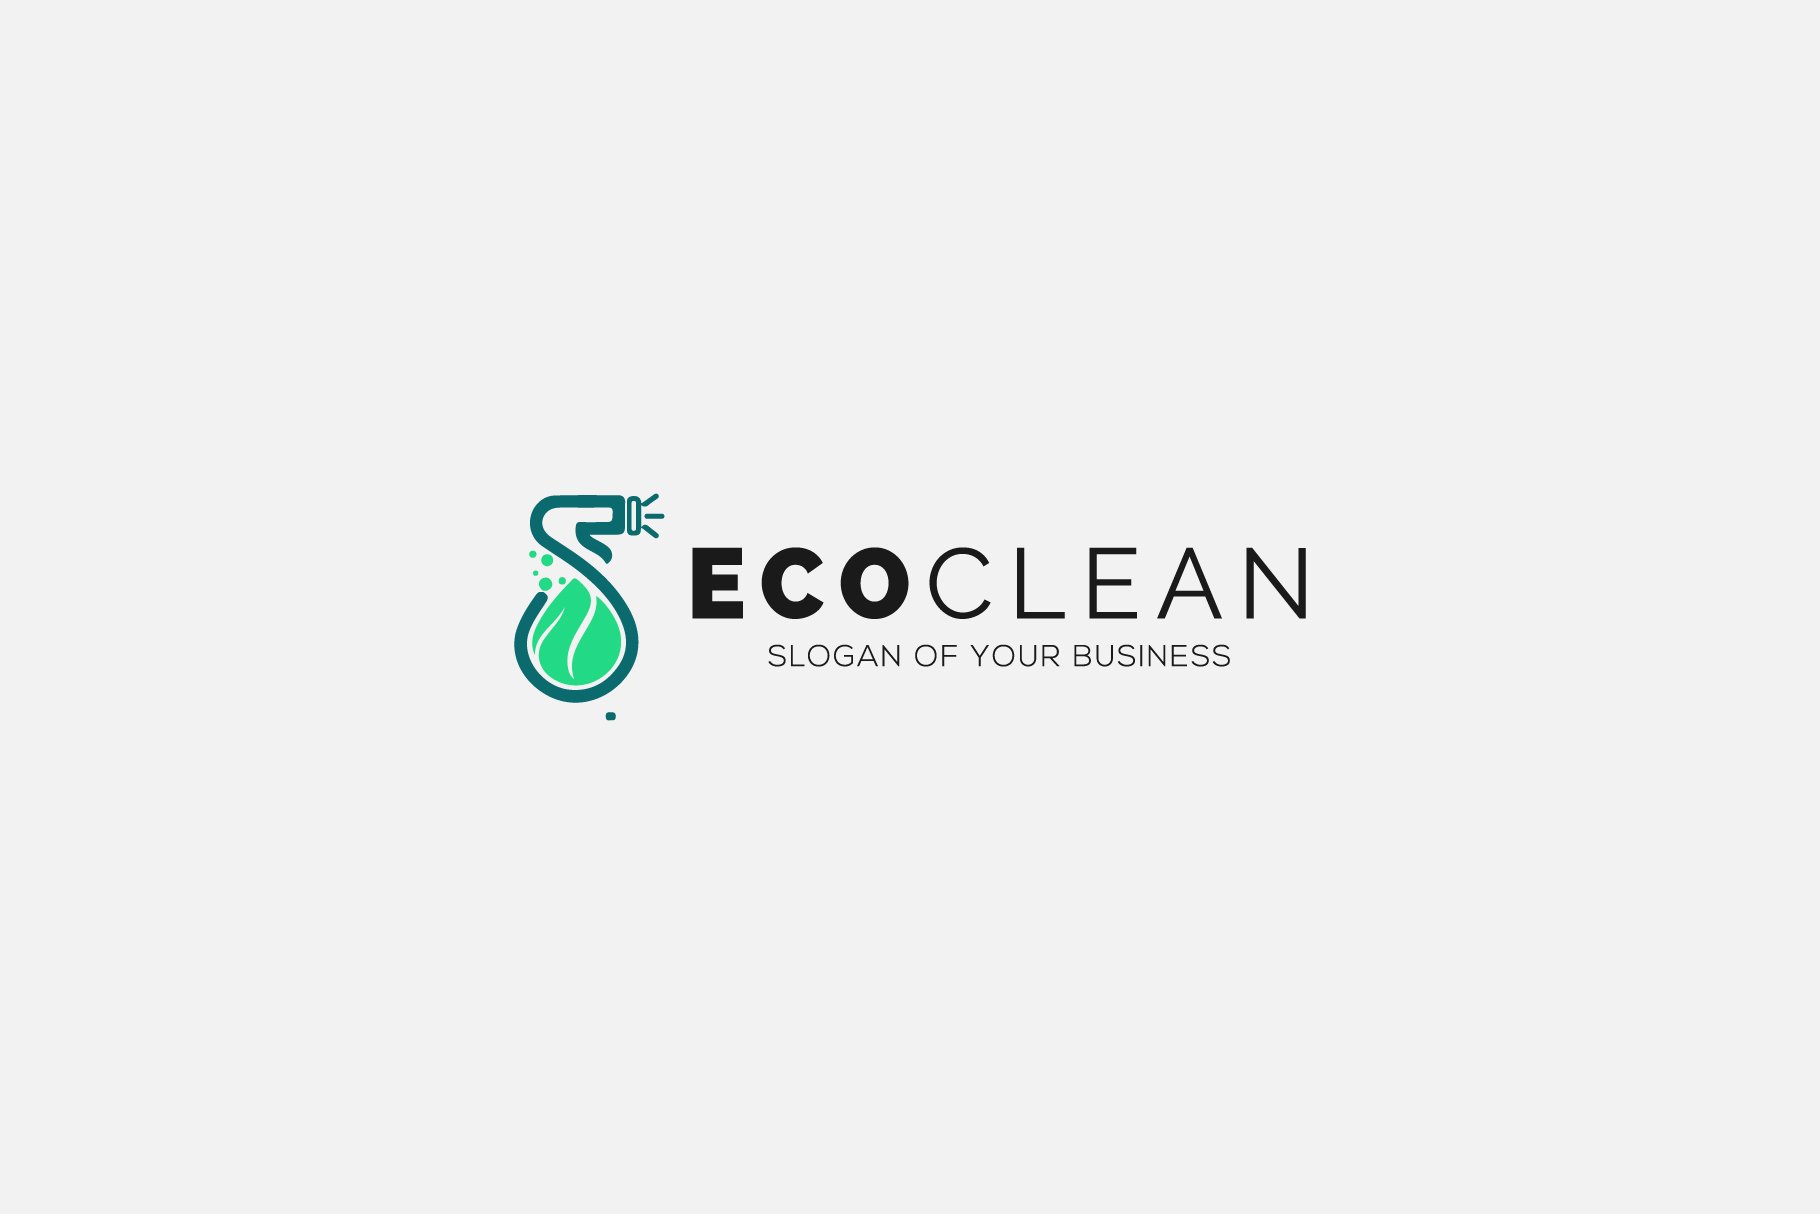 Eco Clean spray Logo Template Design cover image.